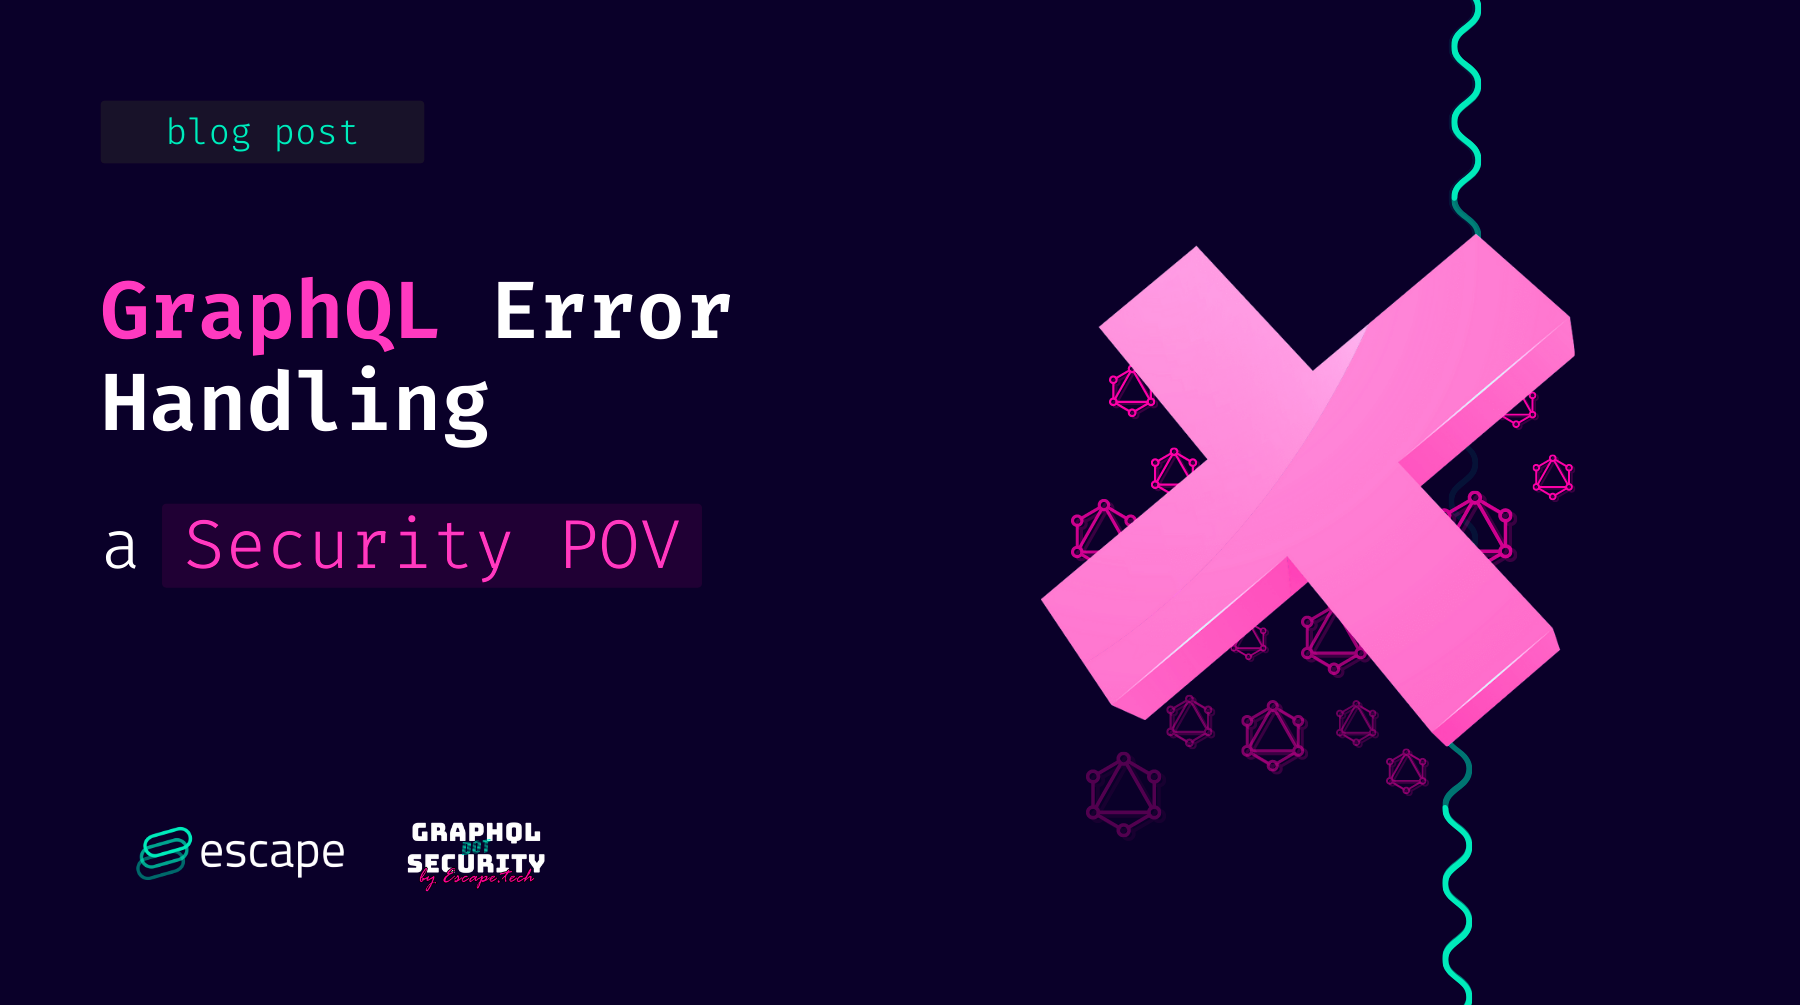 GraphQL Error Handling: a Security POV